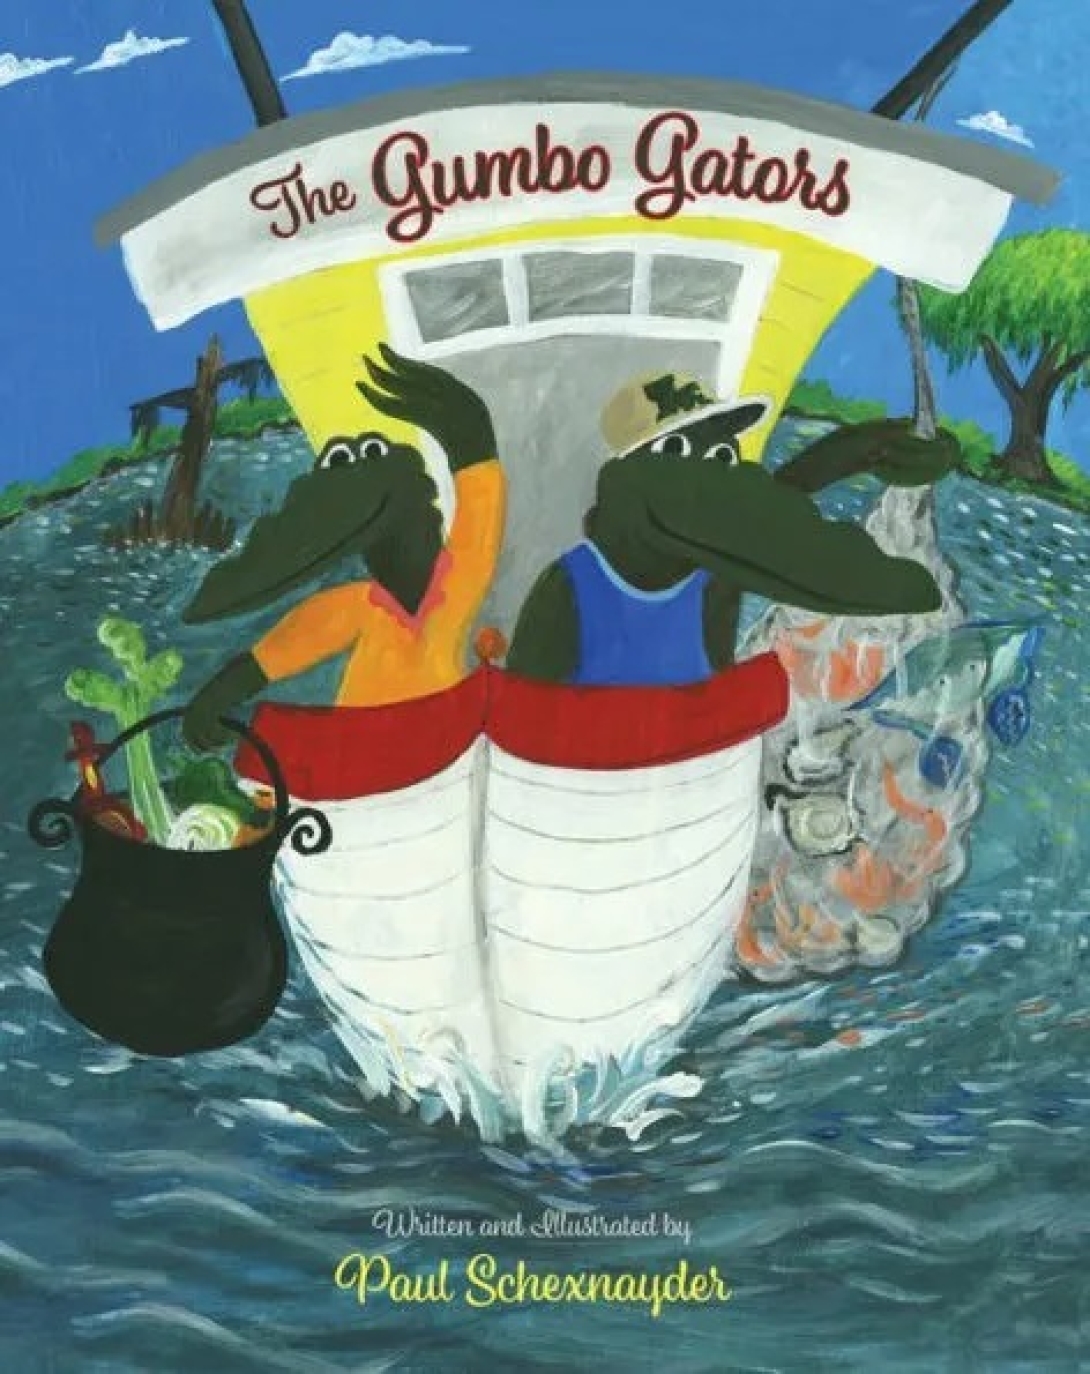 Gumbo Gators